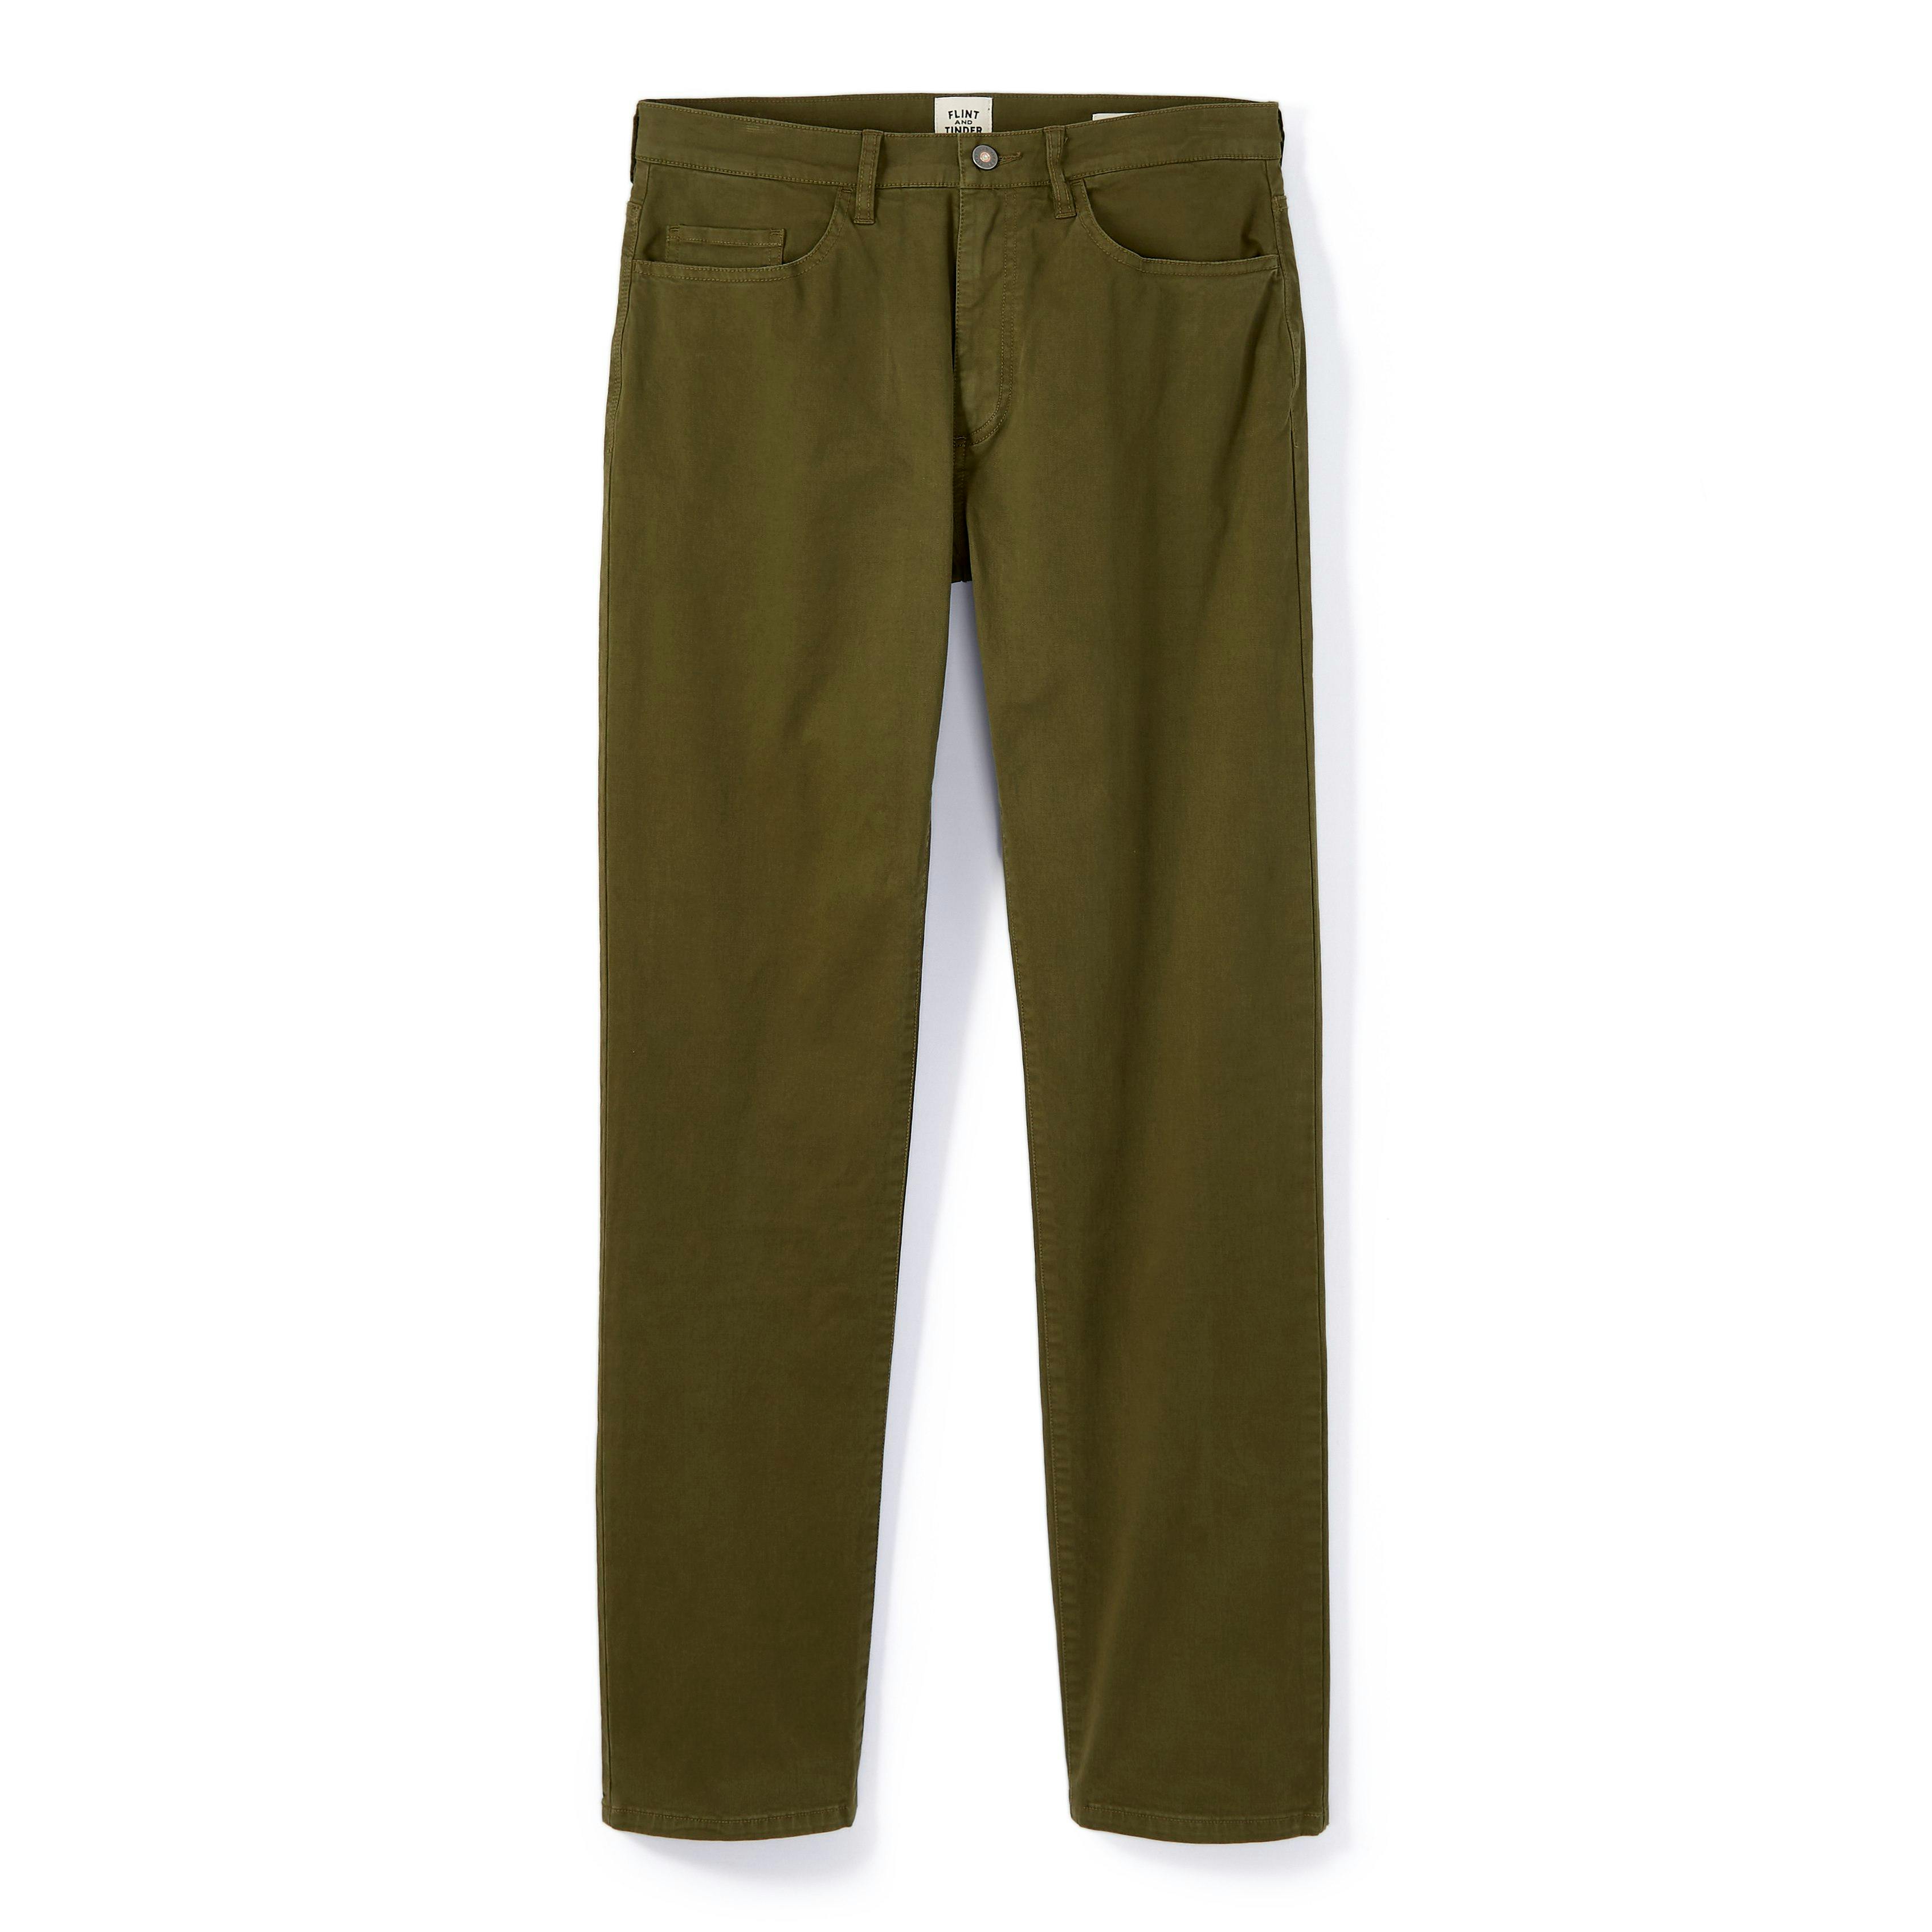 J.Crew Ladies Pants Straight Casual Dark Green Cotton Pocket Button Zip  Size 2S